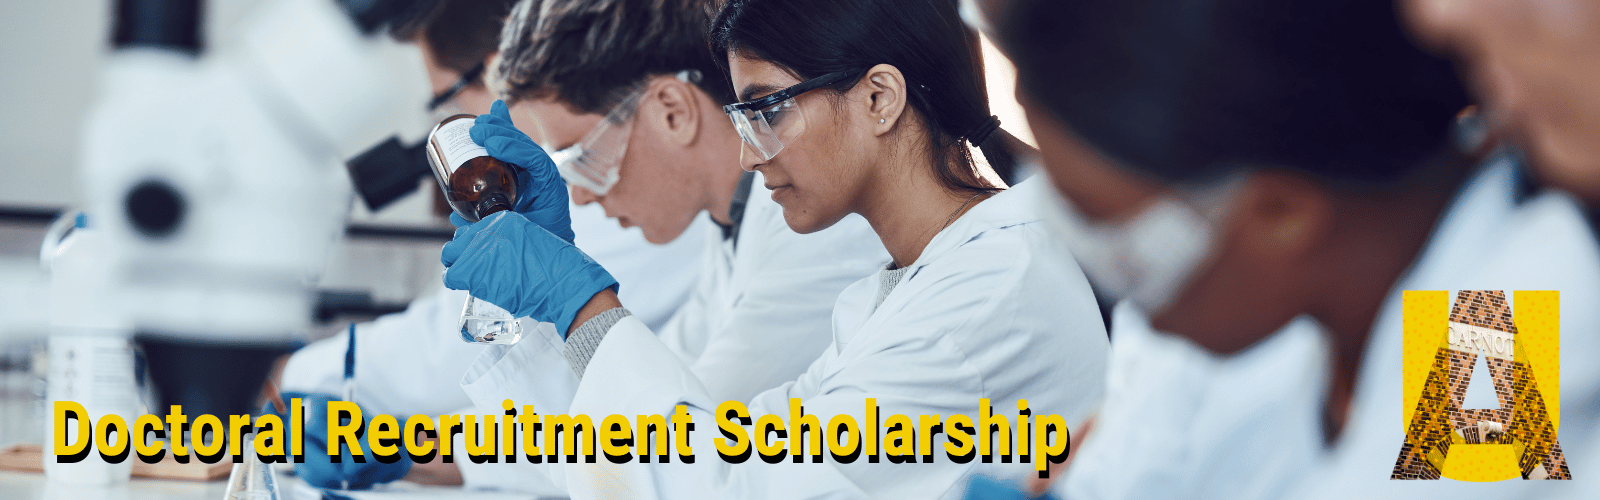 Department of Medicine Doctoral Recuitment Scholarship